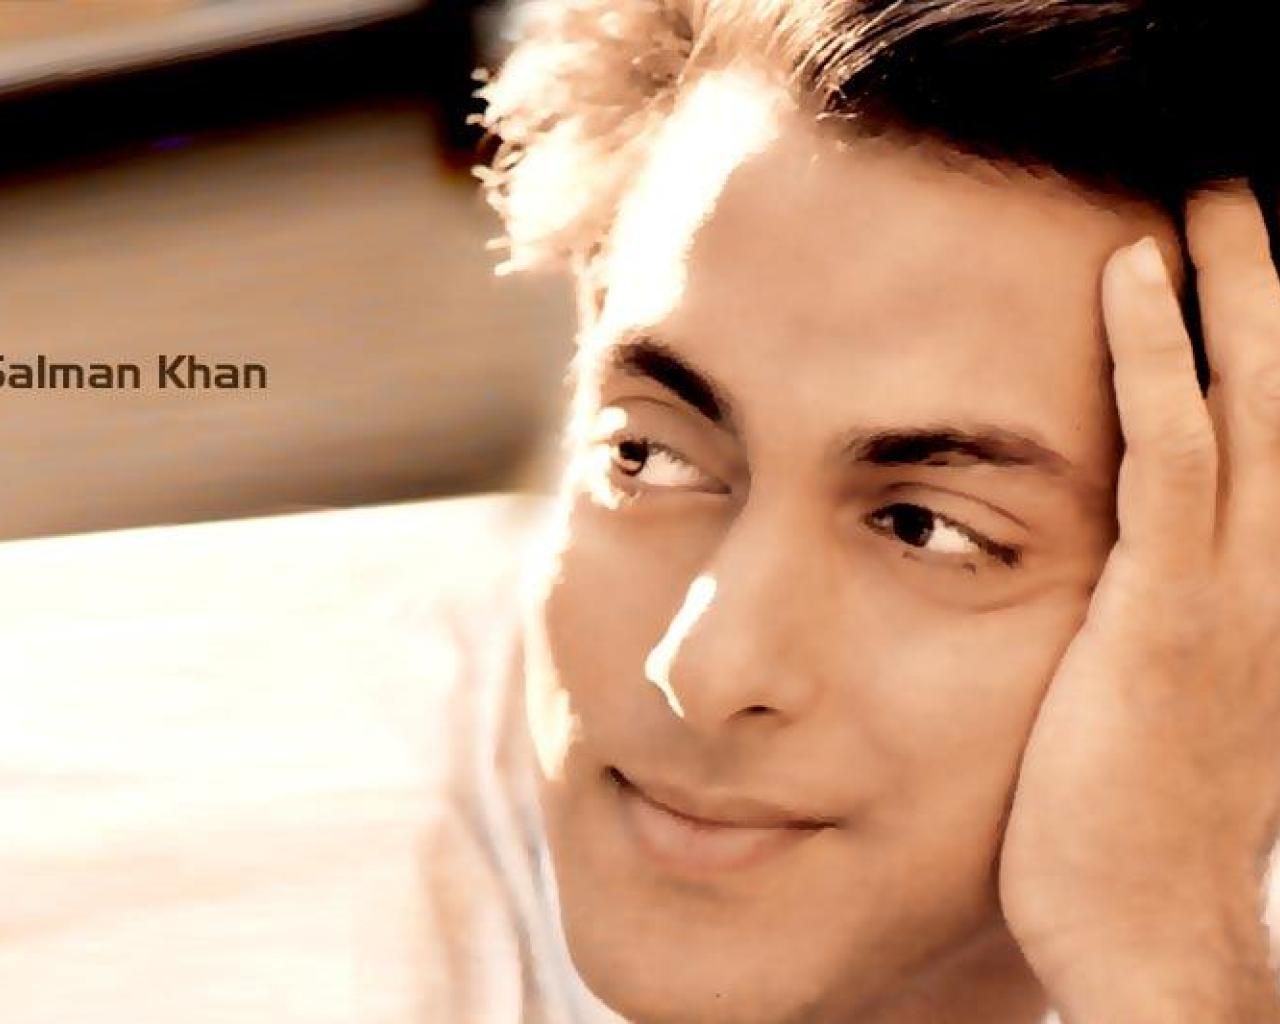 Salman Khan Old Songs Remix Download - celestialturkey